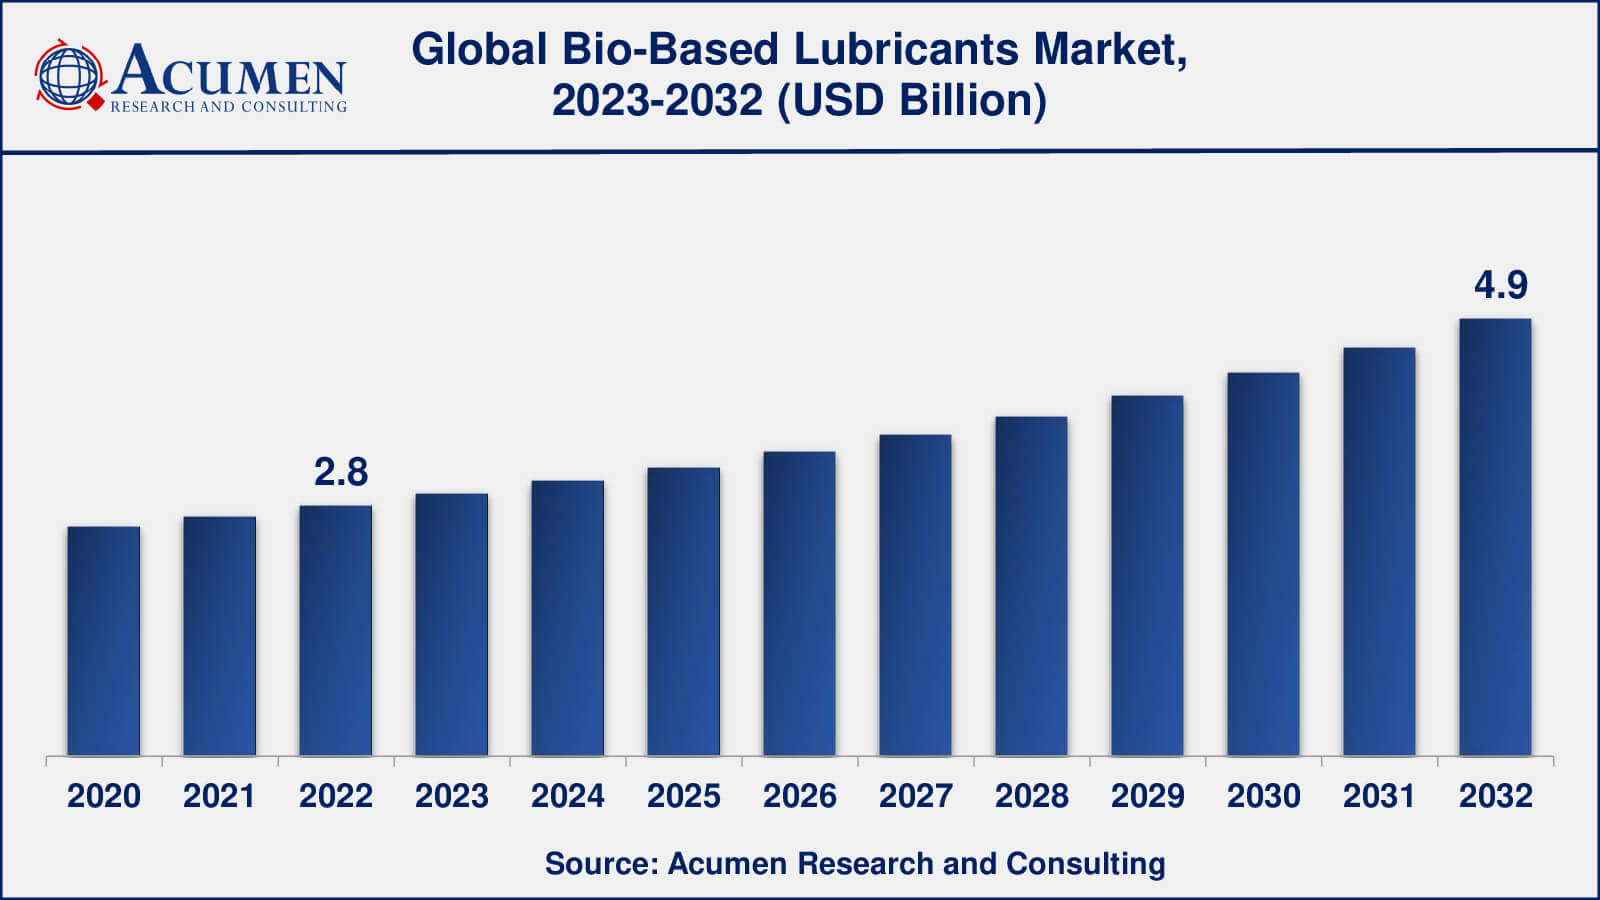 Global Bio-Based Lubricants Market Dynamics